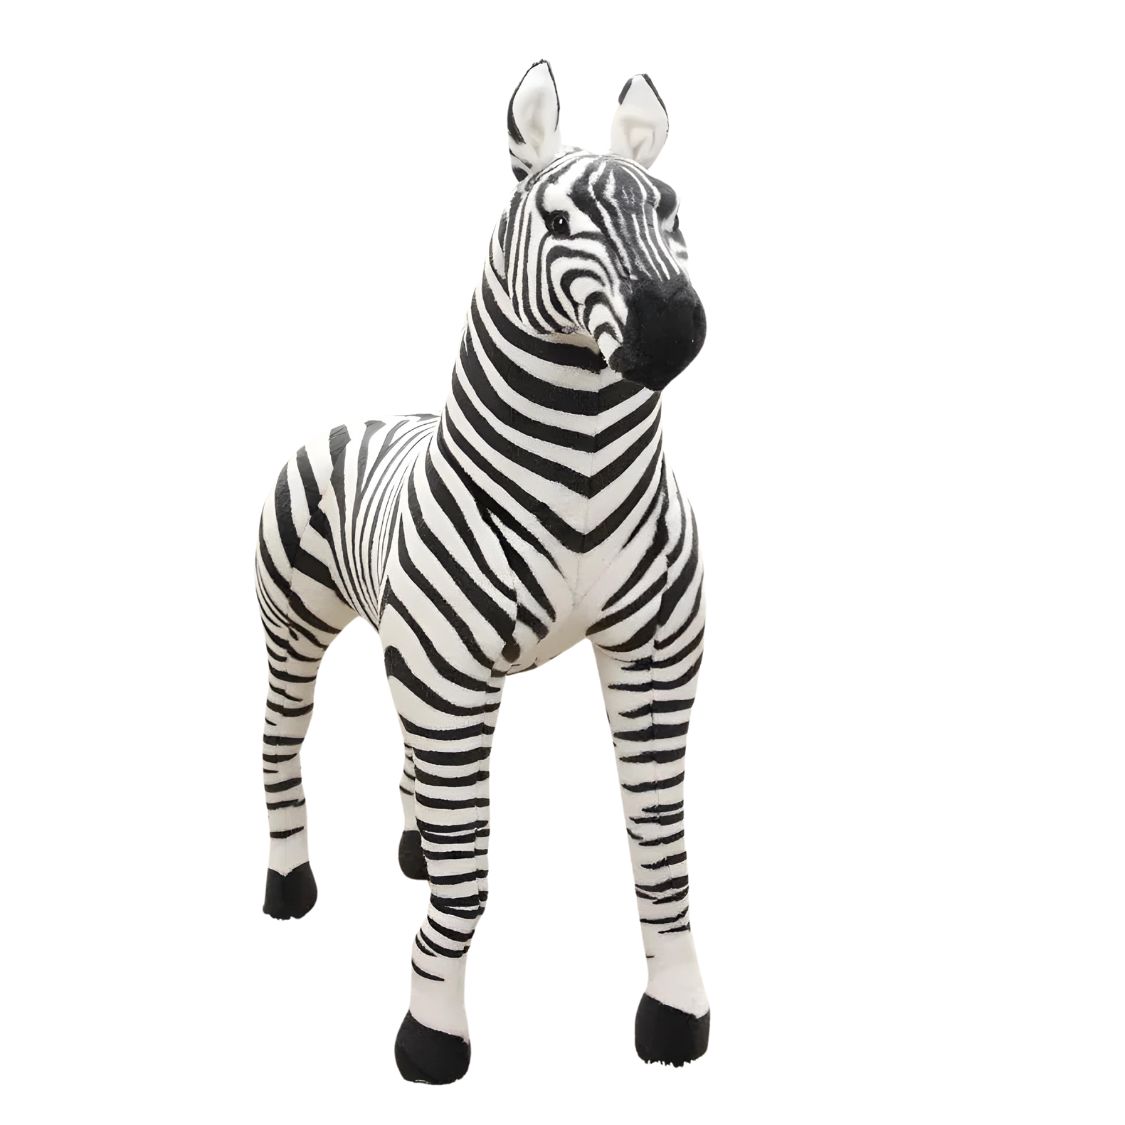 Large Zebra Plush Stuffed Animal